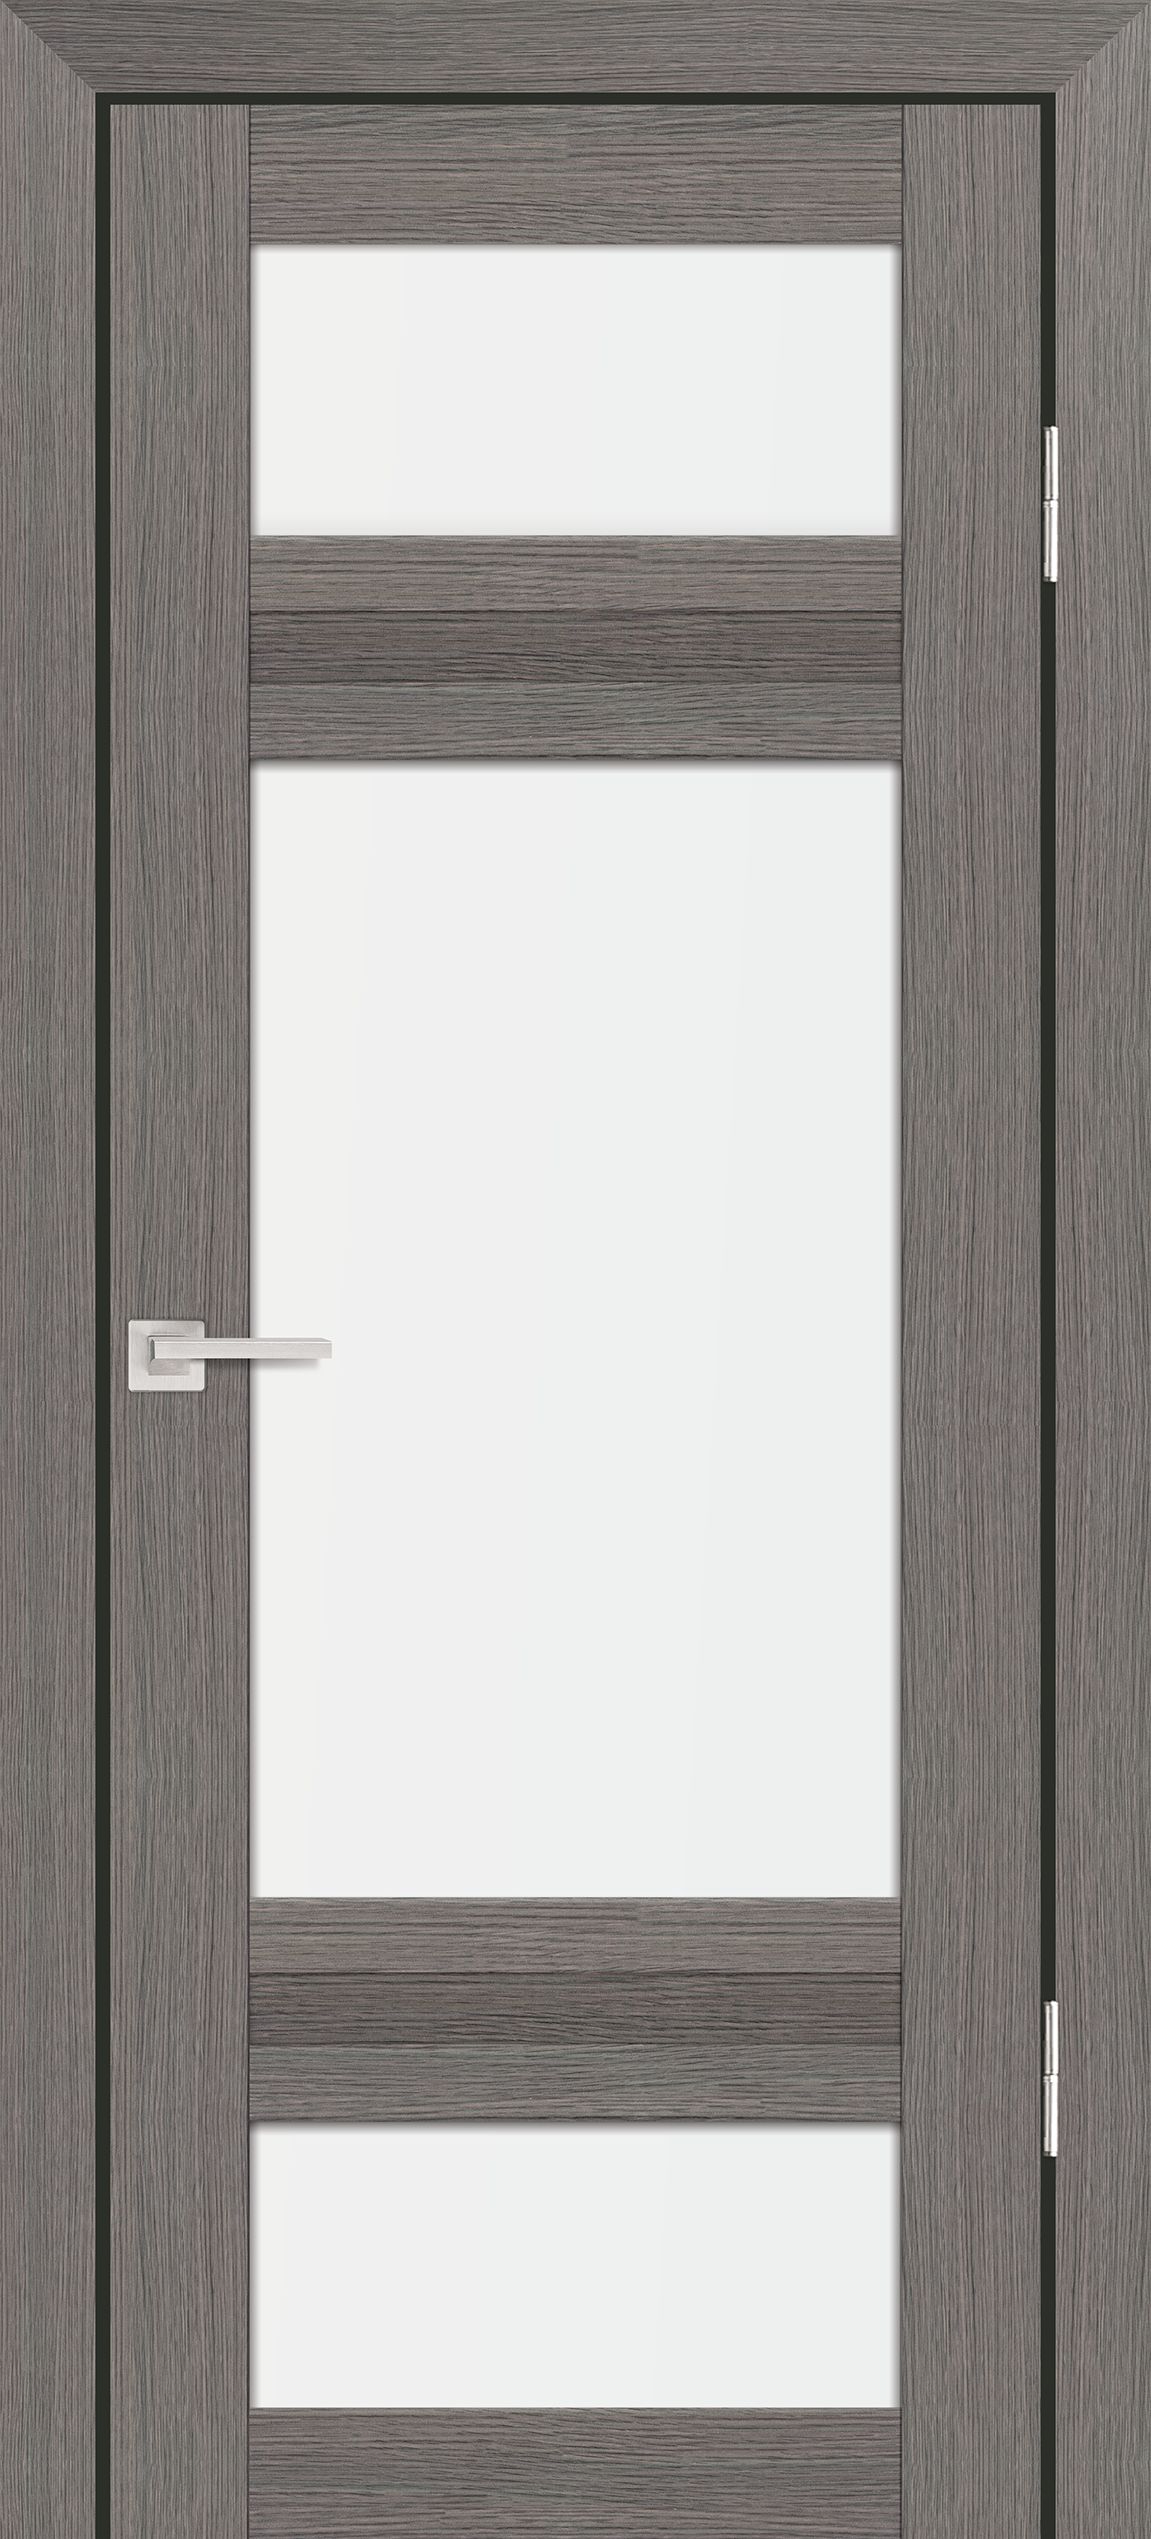 Двери ЭКОШПОН, ПВХ PROFILO PORTE PS-06 со стеклом Грей Мелинга размер 200 х 70 см. артикул f0000044382